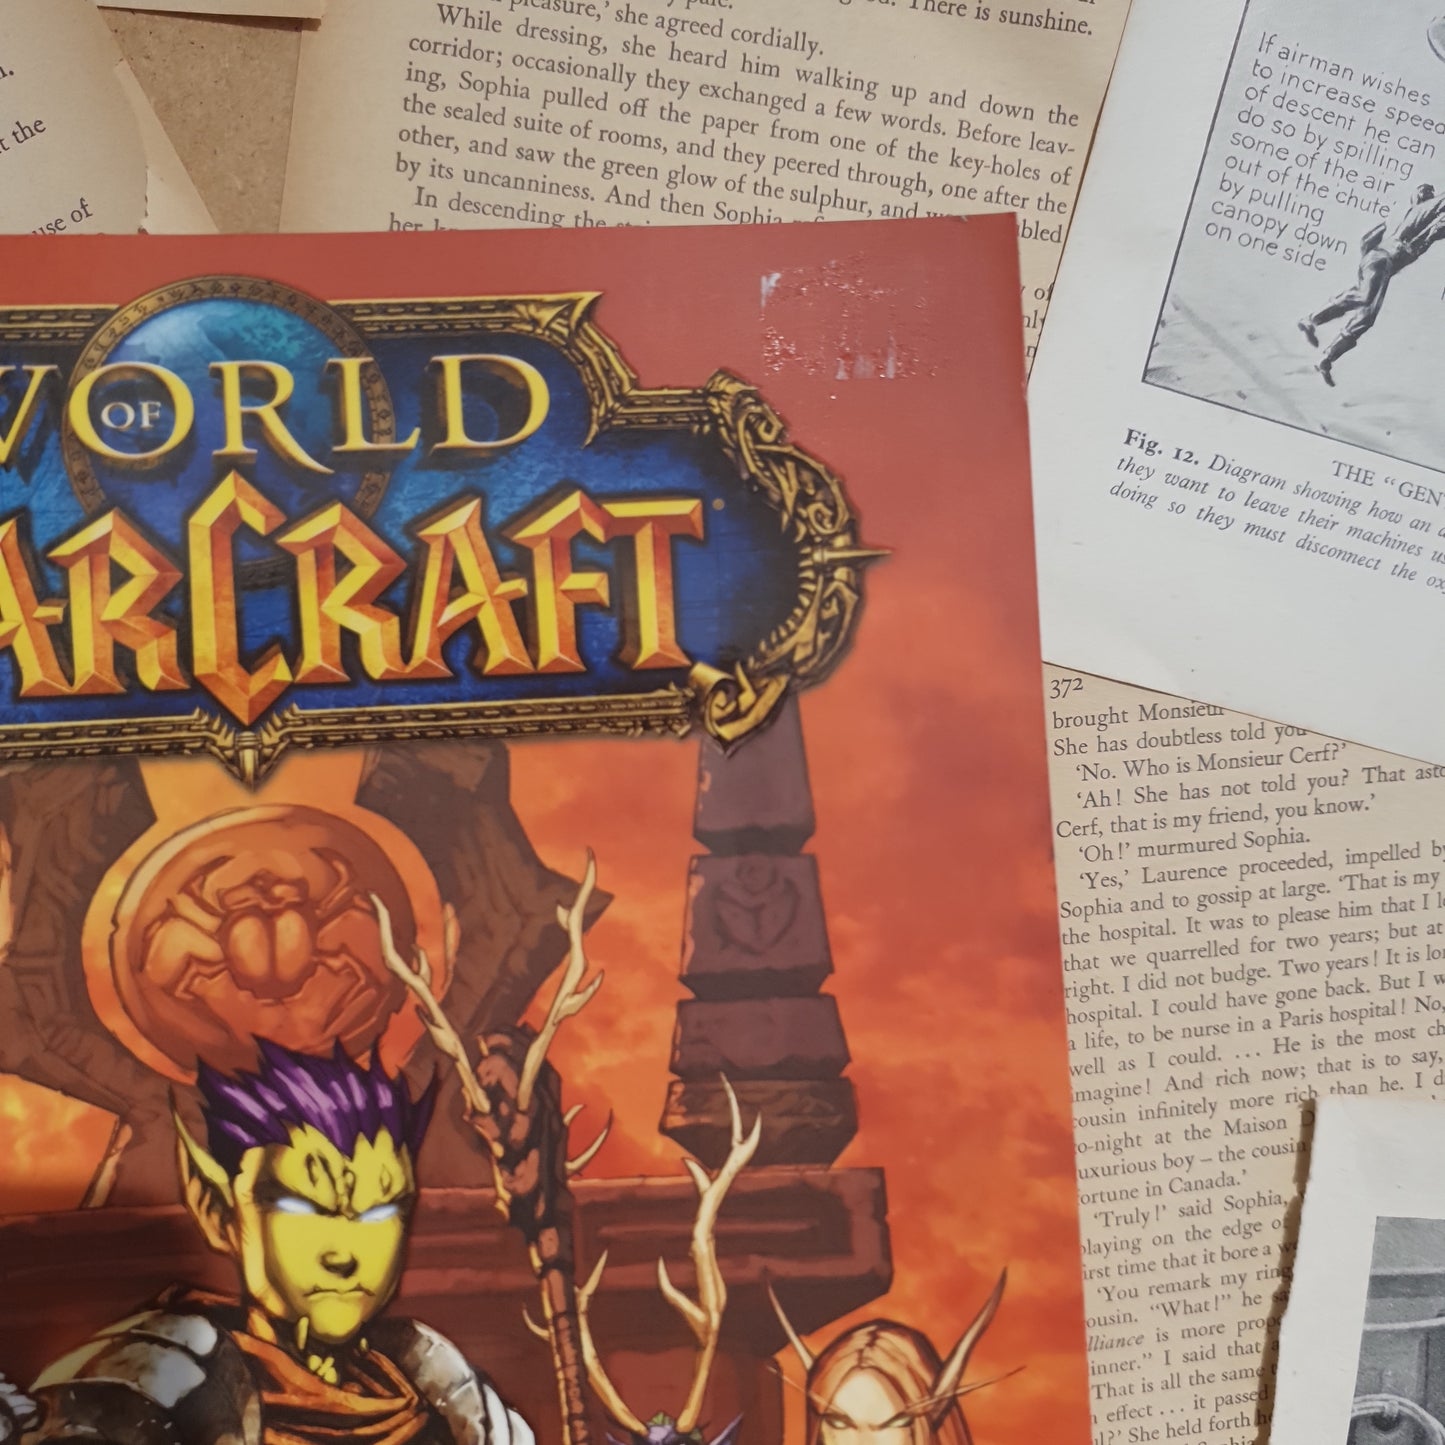 World of Warcraft: Book Four by Simonson, Simonson, Bowden... (2010)